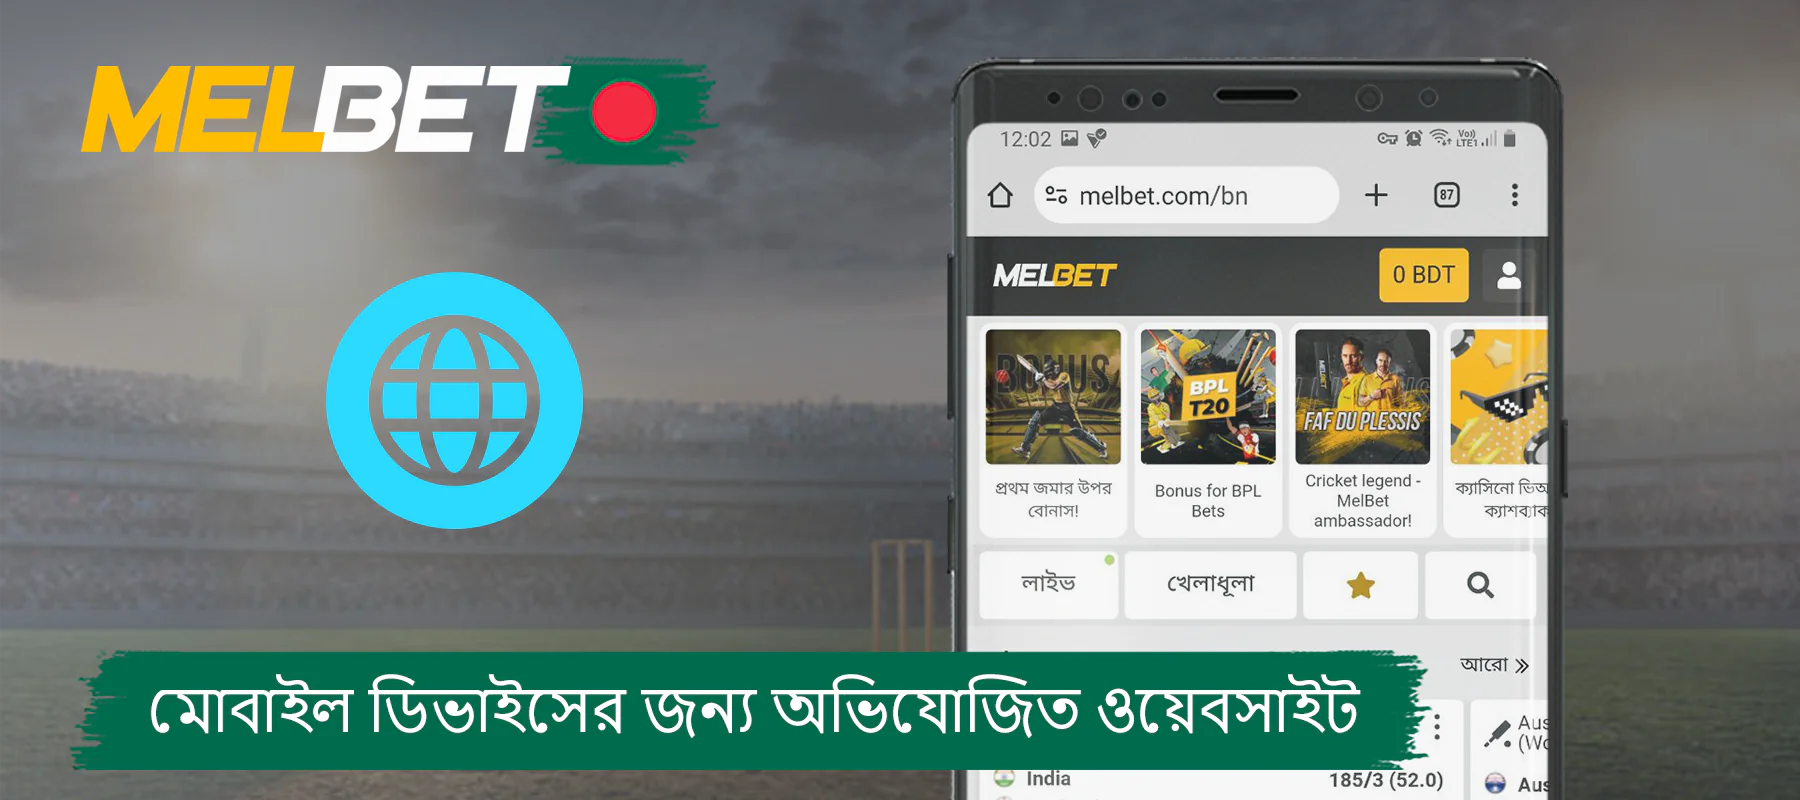 Android এবং iOS এর জন্য মোবাইল ডিভাইসের জন্য অভিযোজিত Melbet ওয়েবসাইট